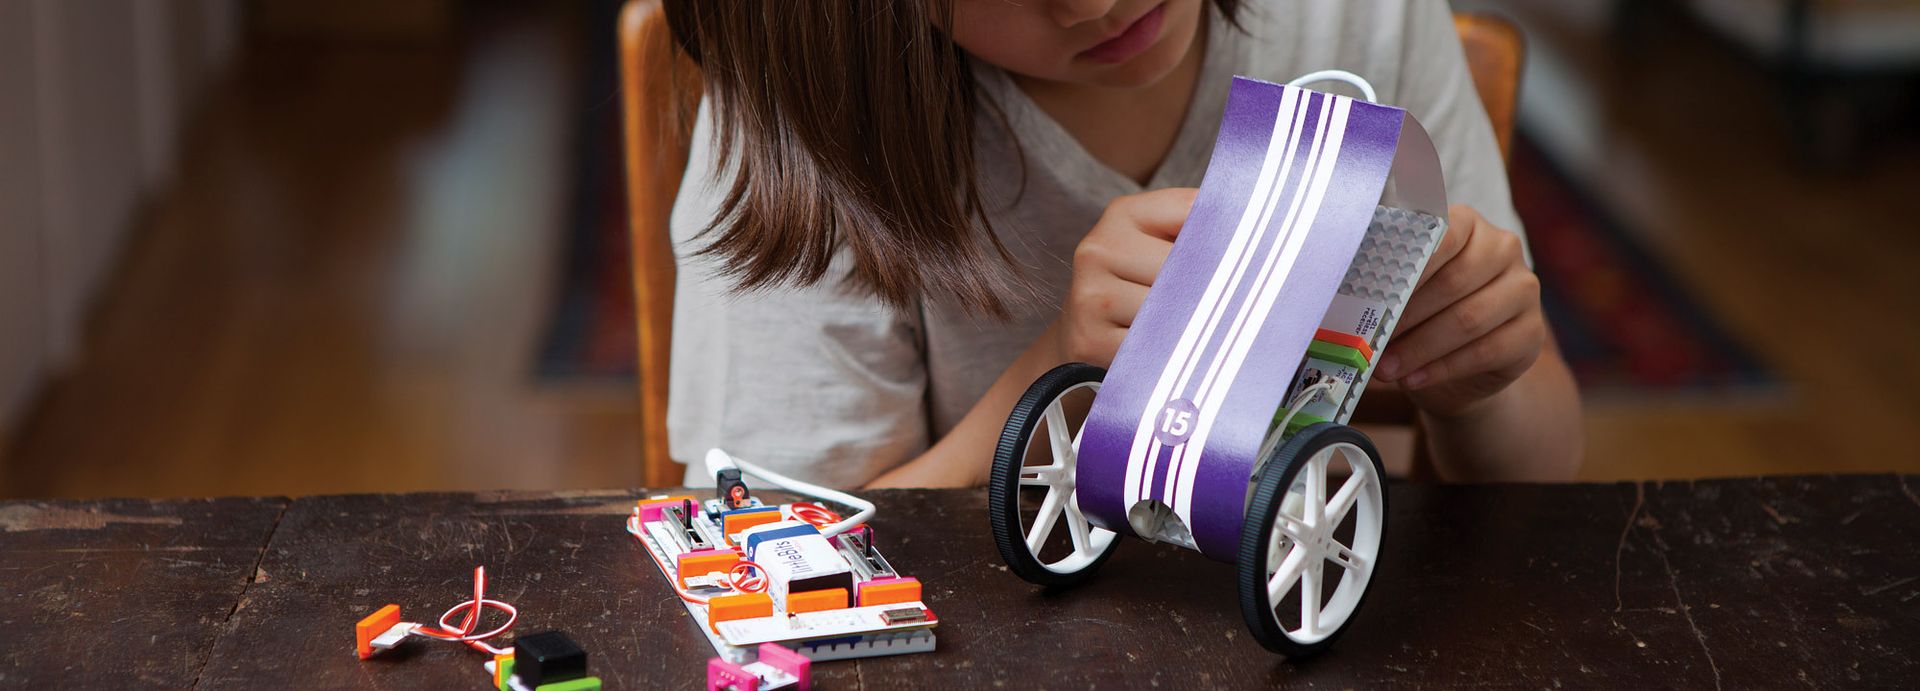 littleBits Gizmos & Gadgets kit: BitBot project